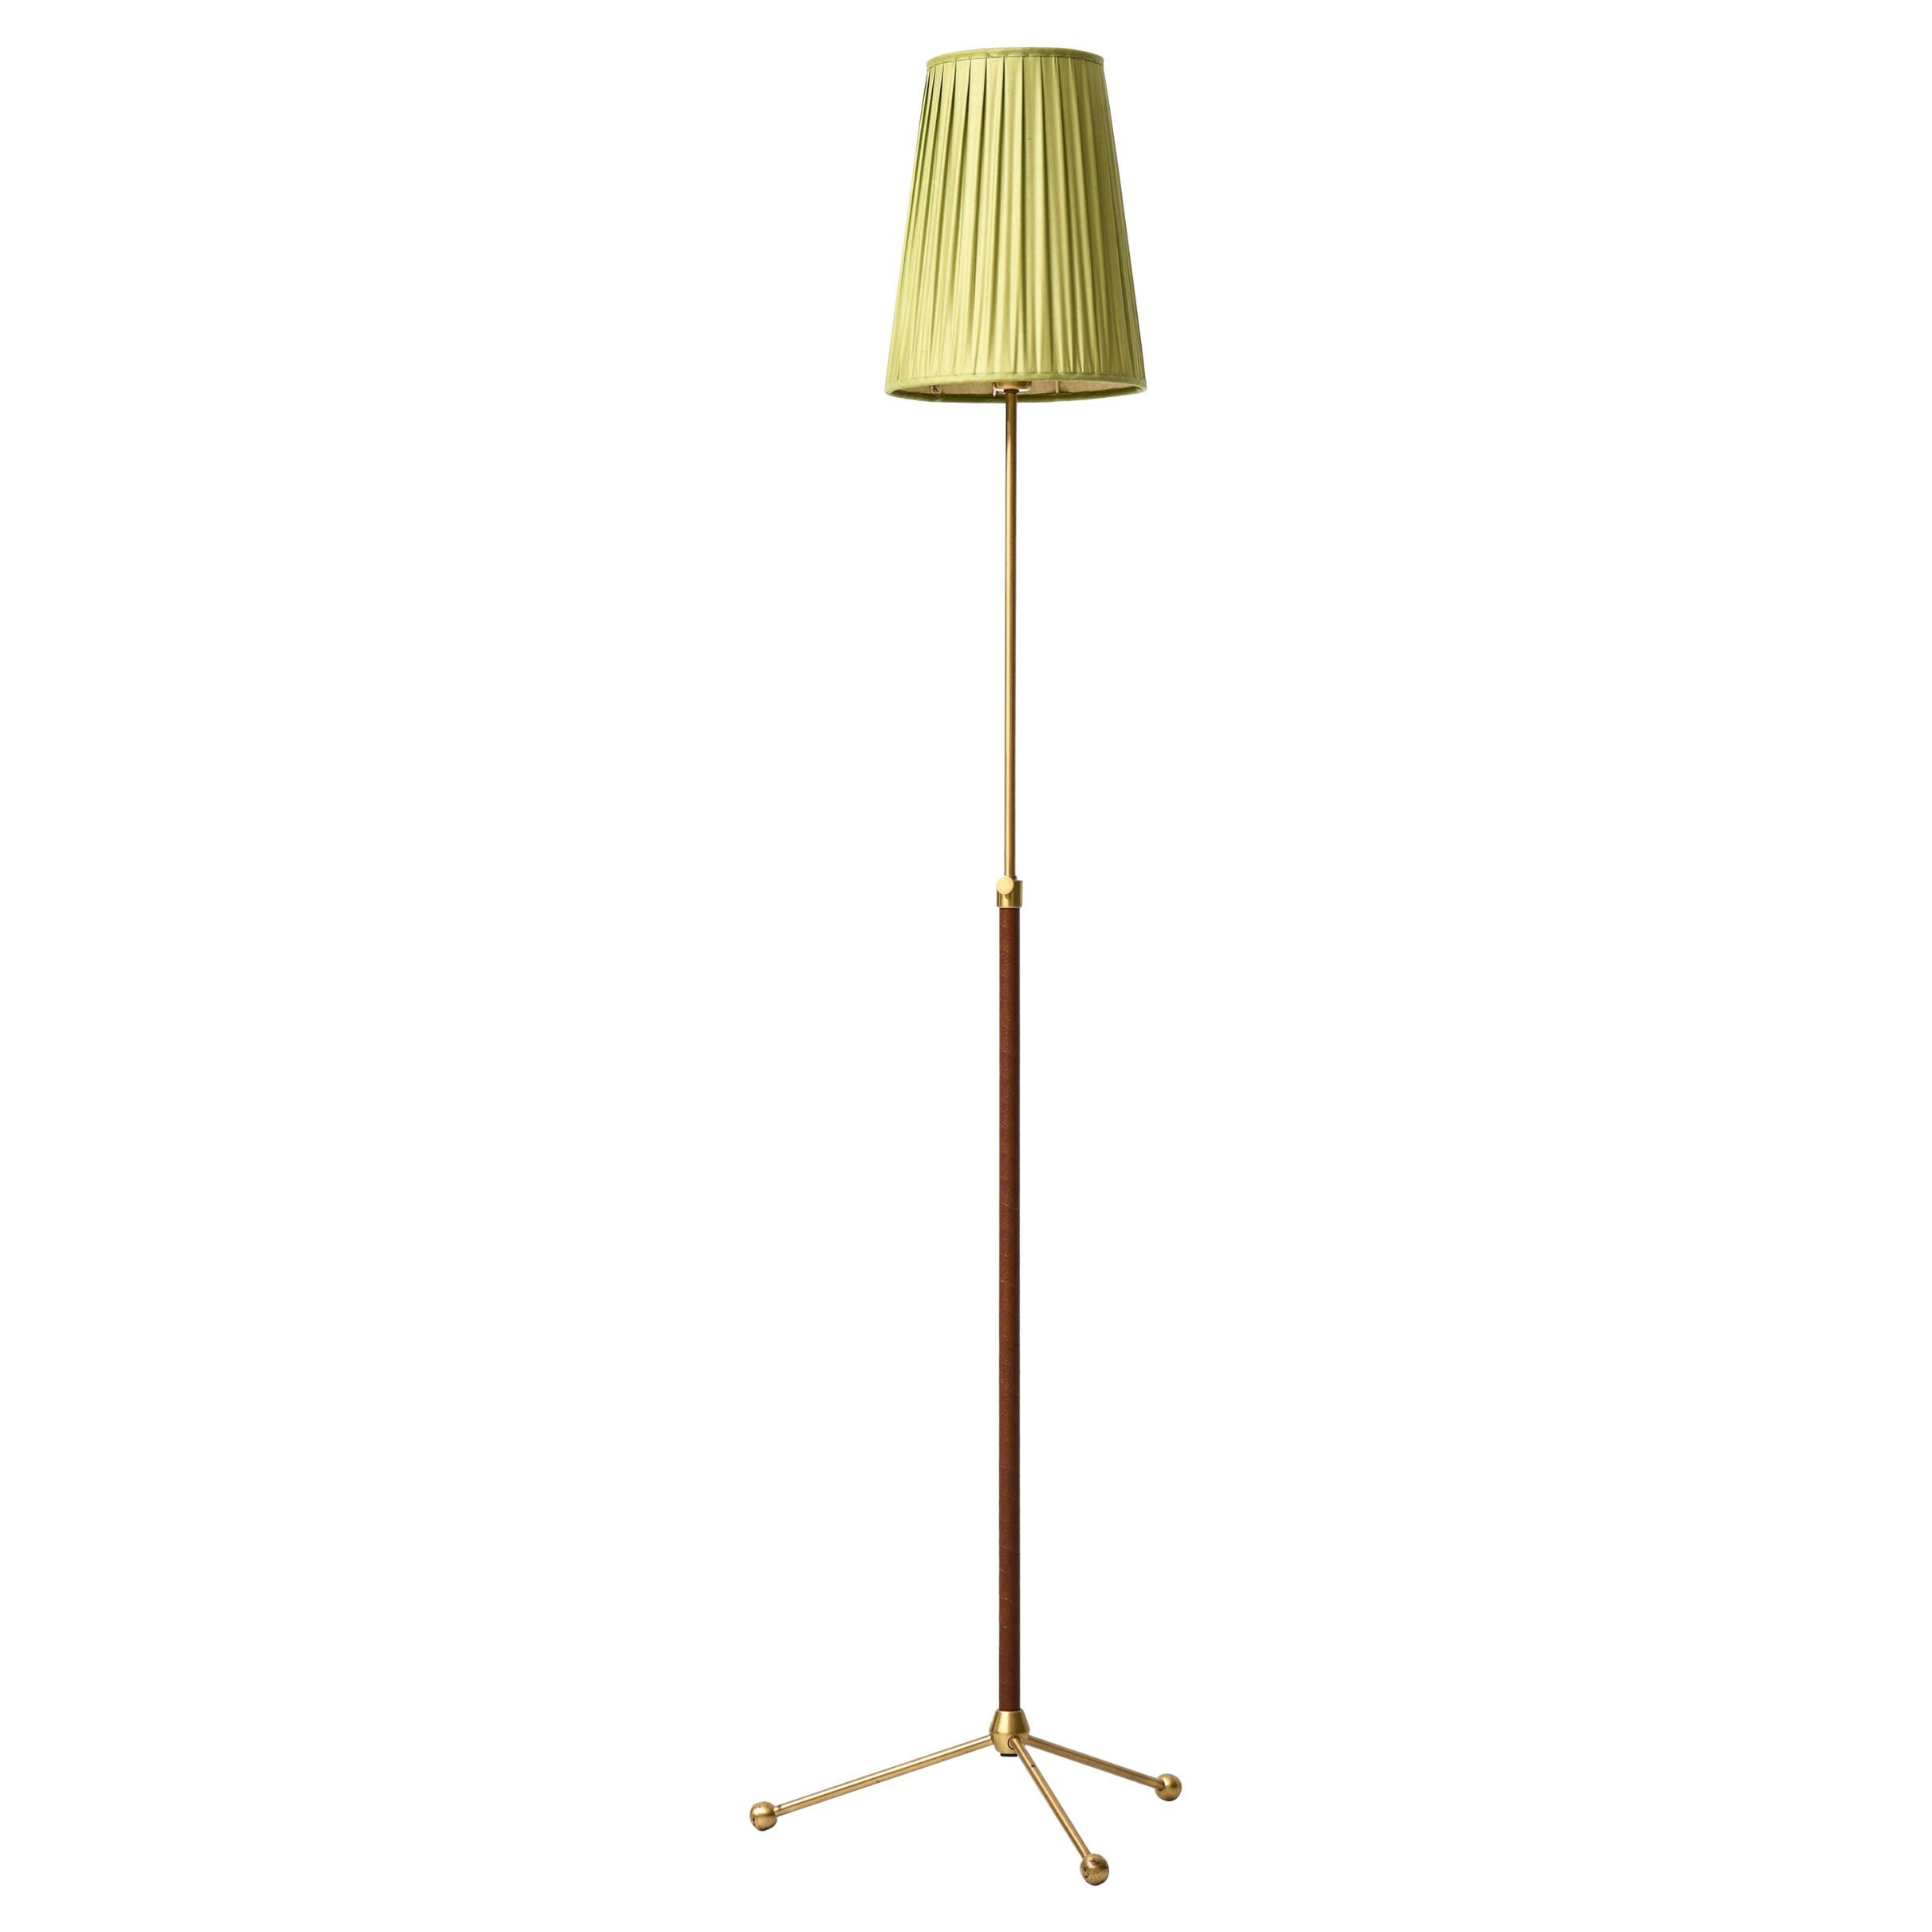 Hans Bergström Floor Lamp Model 544 Produced by Ateljé Lyktan in Åhus, Sweden For Sale